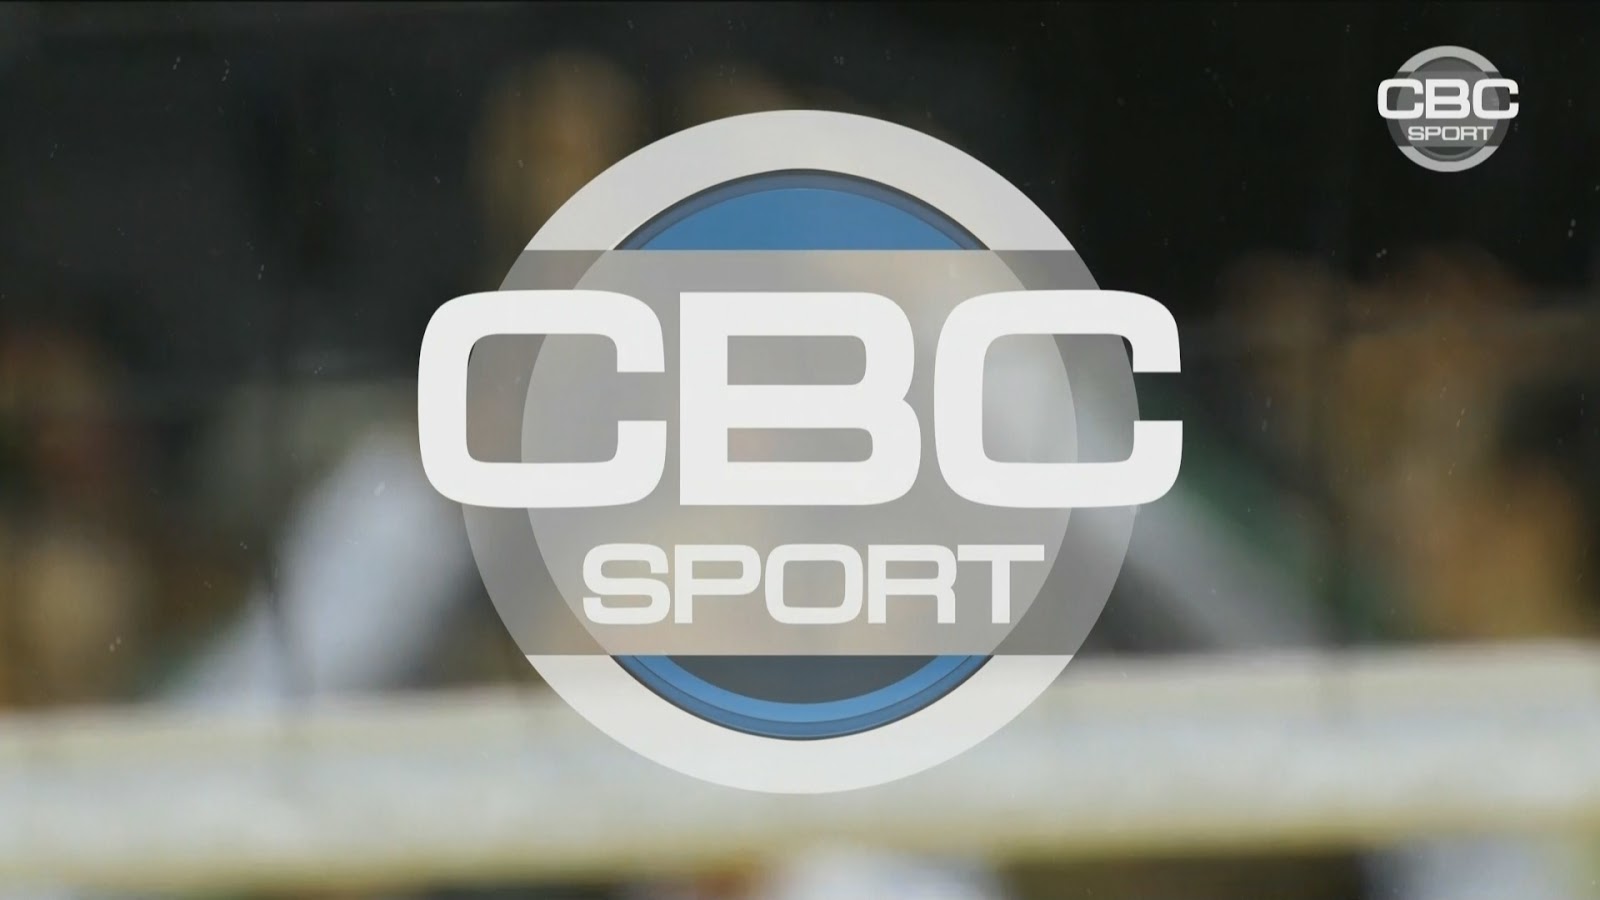 Cbs sport canli. Канал CBC Sport. СВС Sport Canli. CBC Sport Canli. CBC Sport одежда.